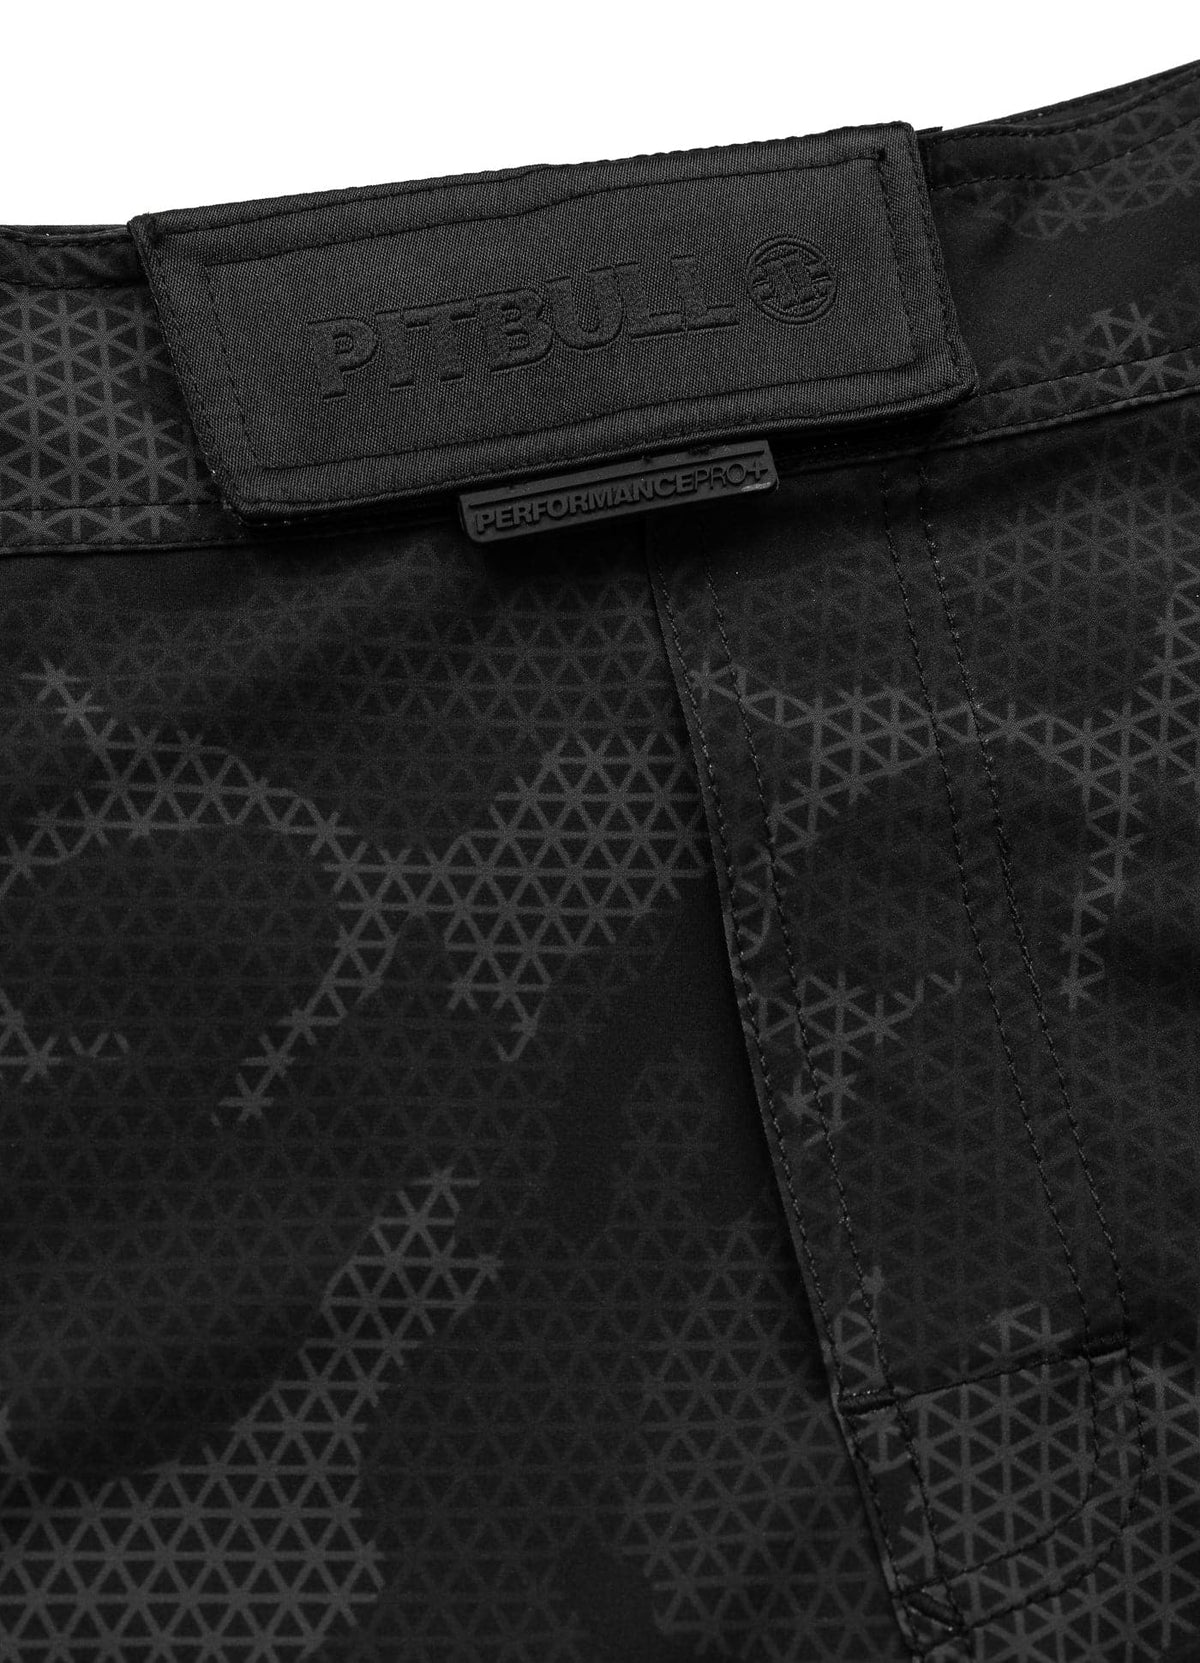 NET CAMO HILLTOP 2 Black Grappling Shorts 3 - Pitbull West Coast International Store 